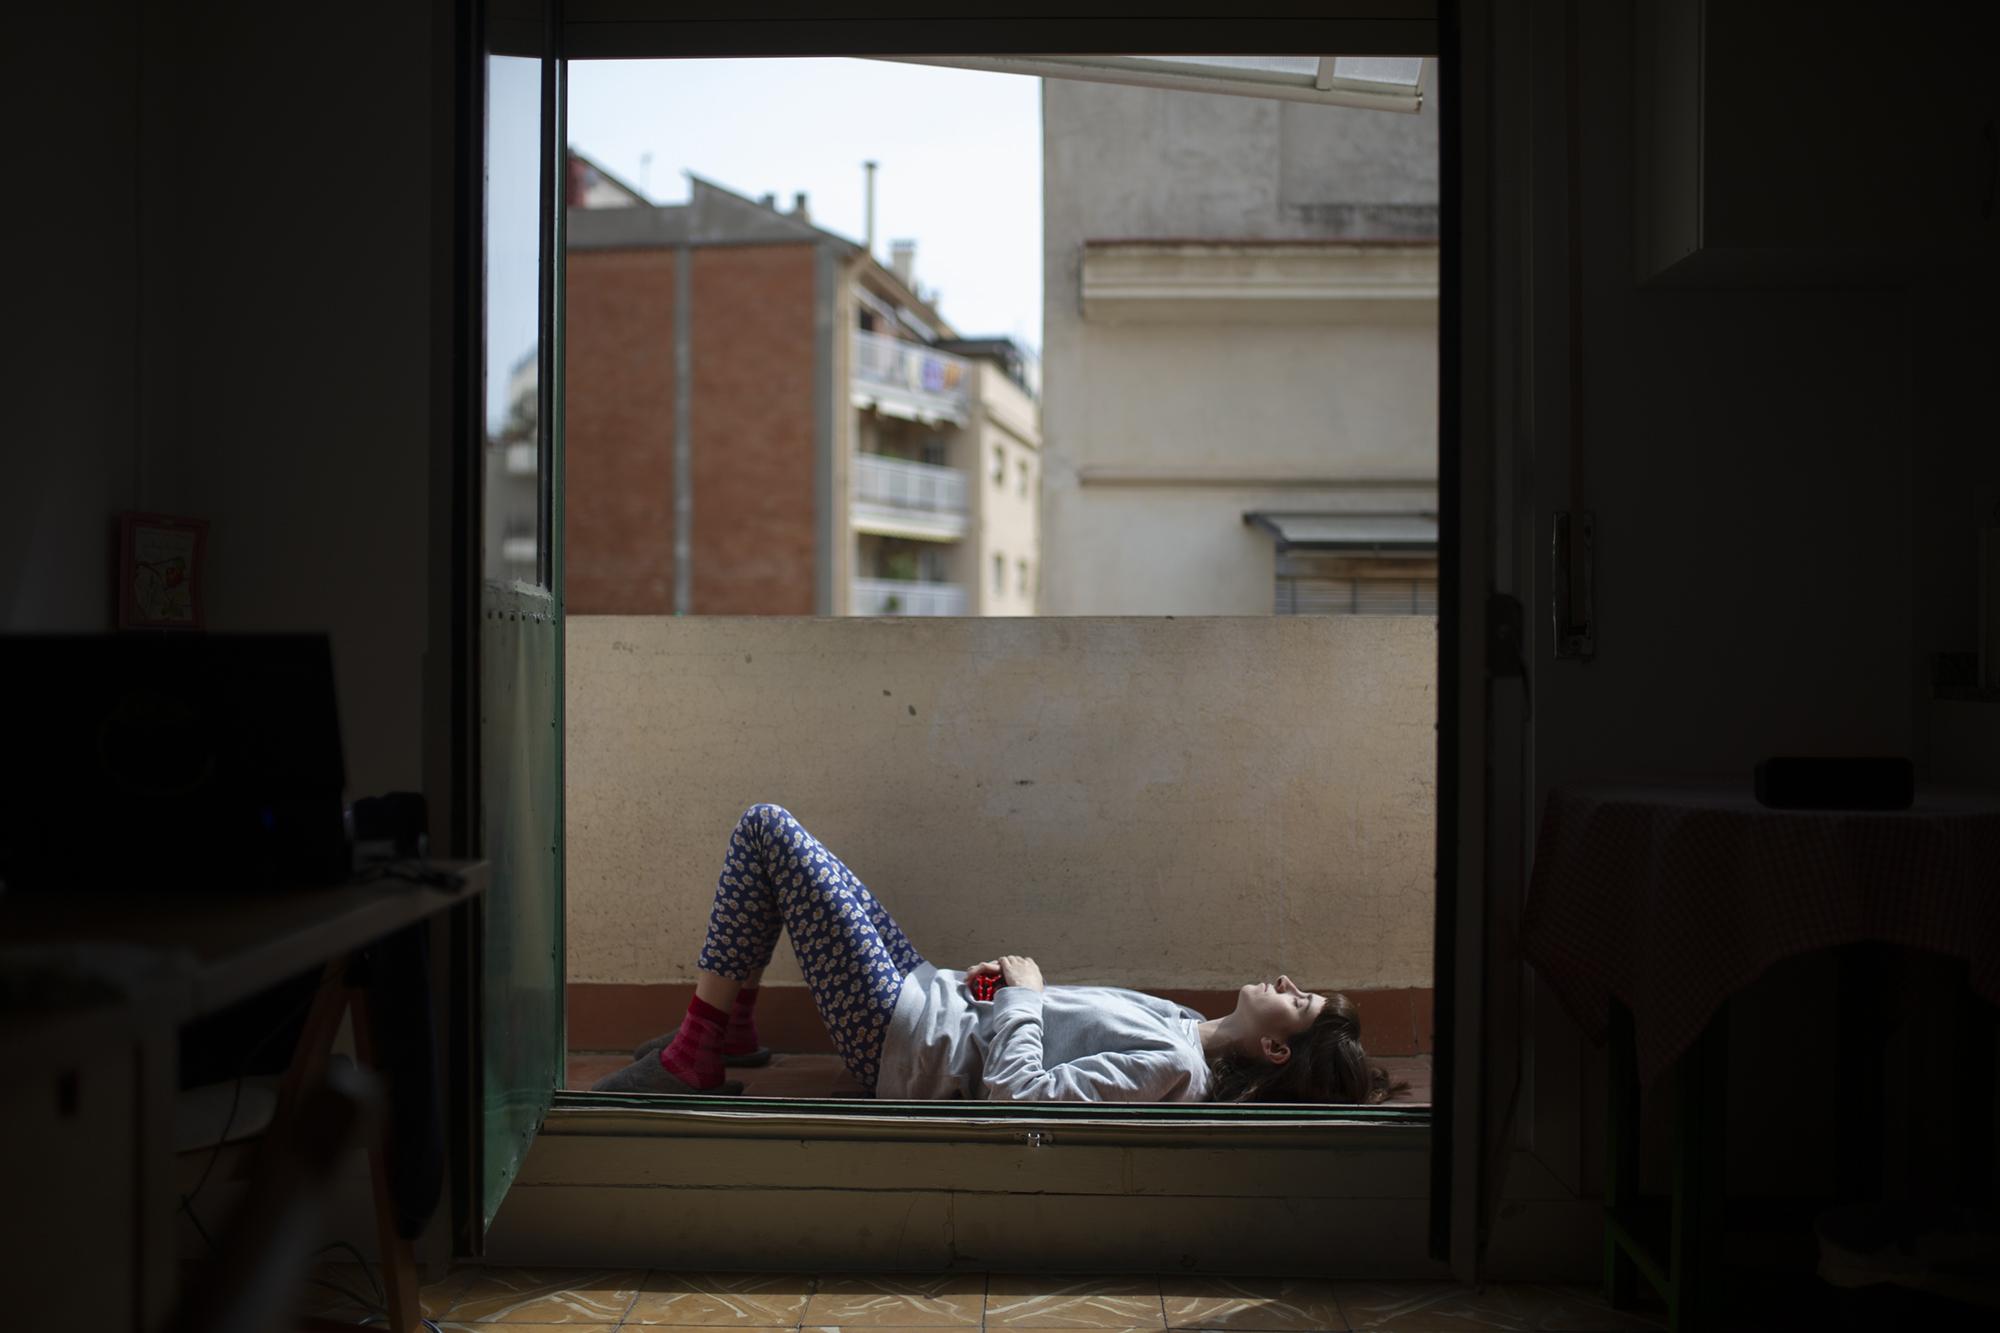 Covid 19 Daily News - Clara sunbathes during Spanin's lockdown. Spain's...